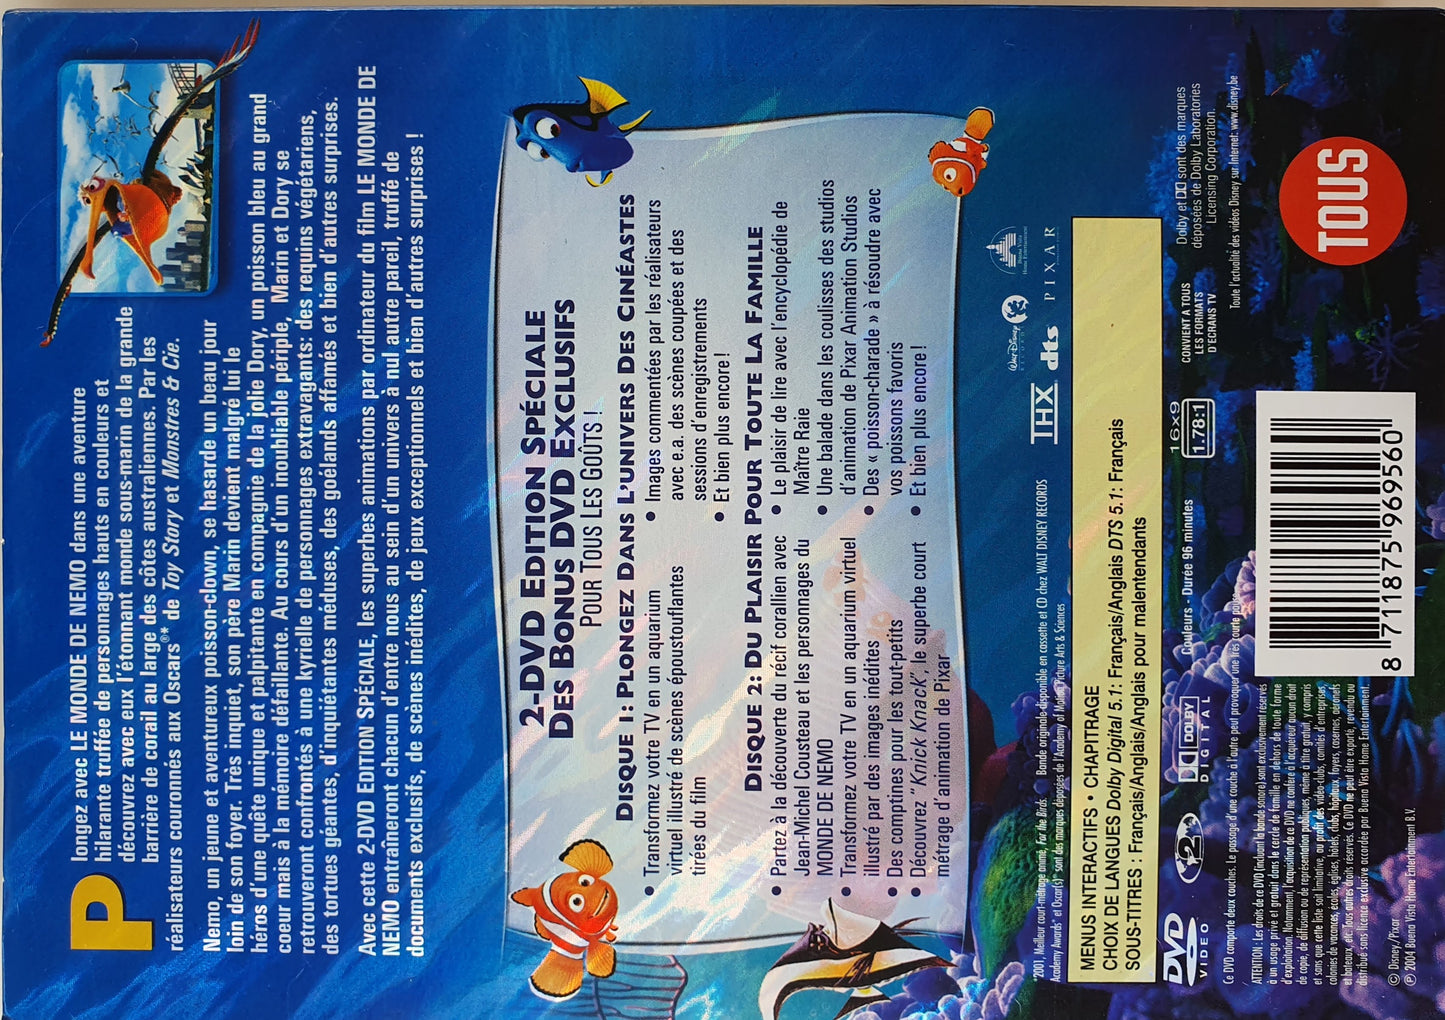 Le Monde de Nemo En, FR Disney  (4601804423223)